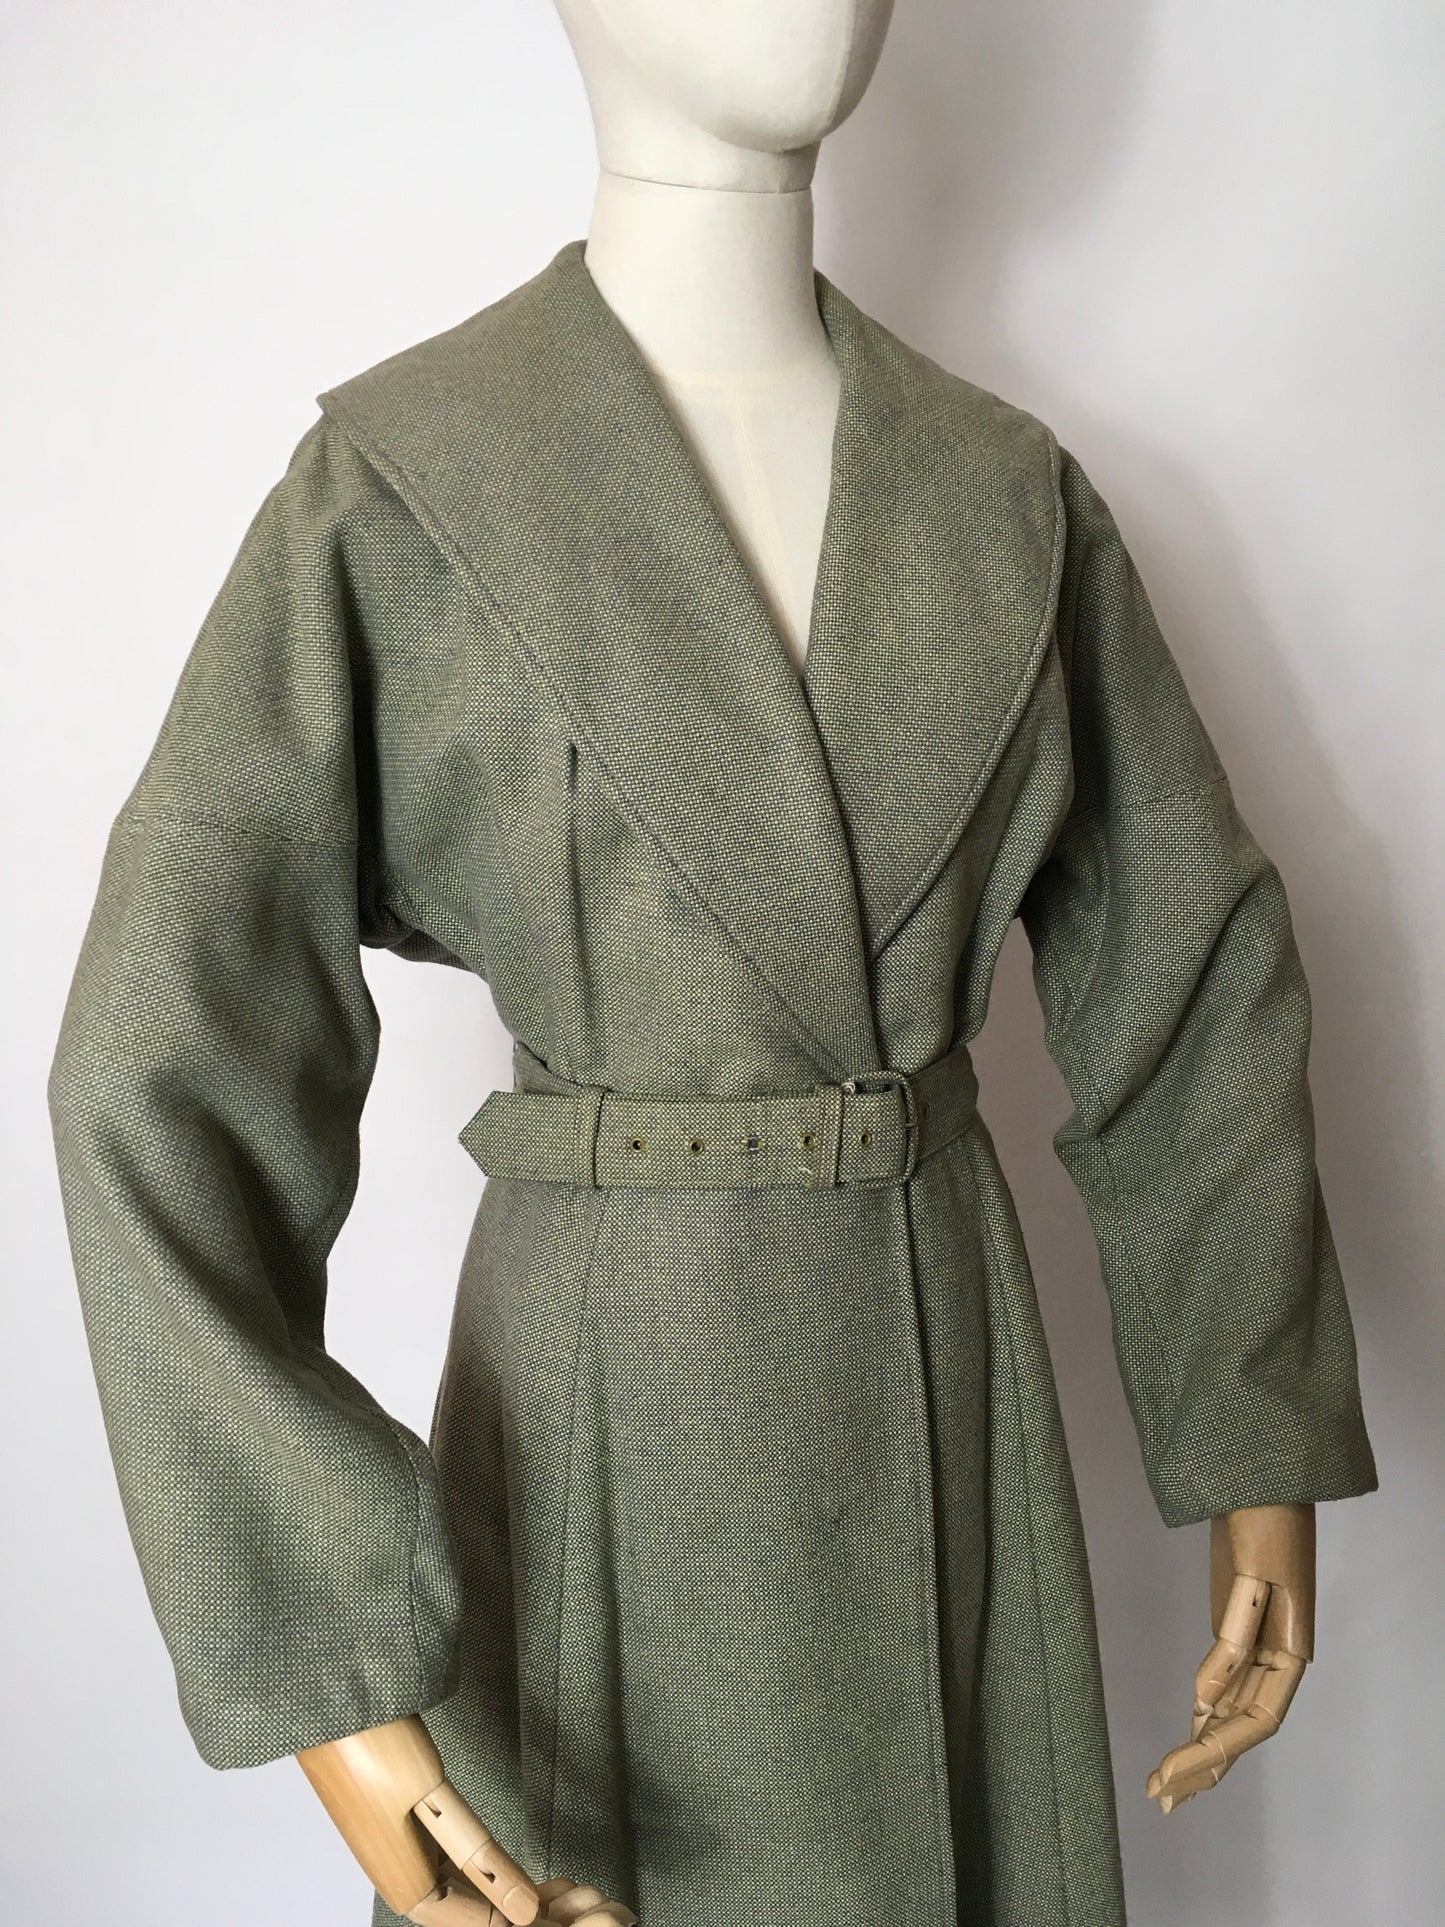 Original 1940’s Showerproof Coat by ‘ Telemac Rainwear Ltd ‘ - Featuring a Fabulous Large Shaped Collar